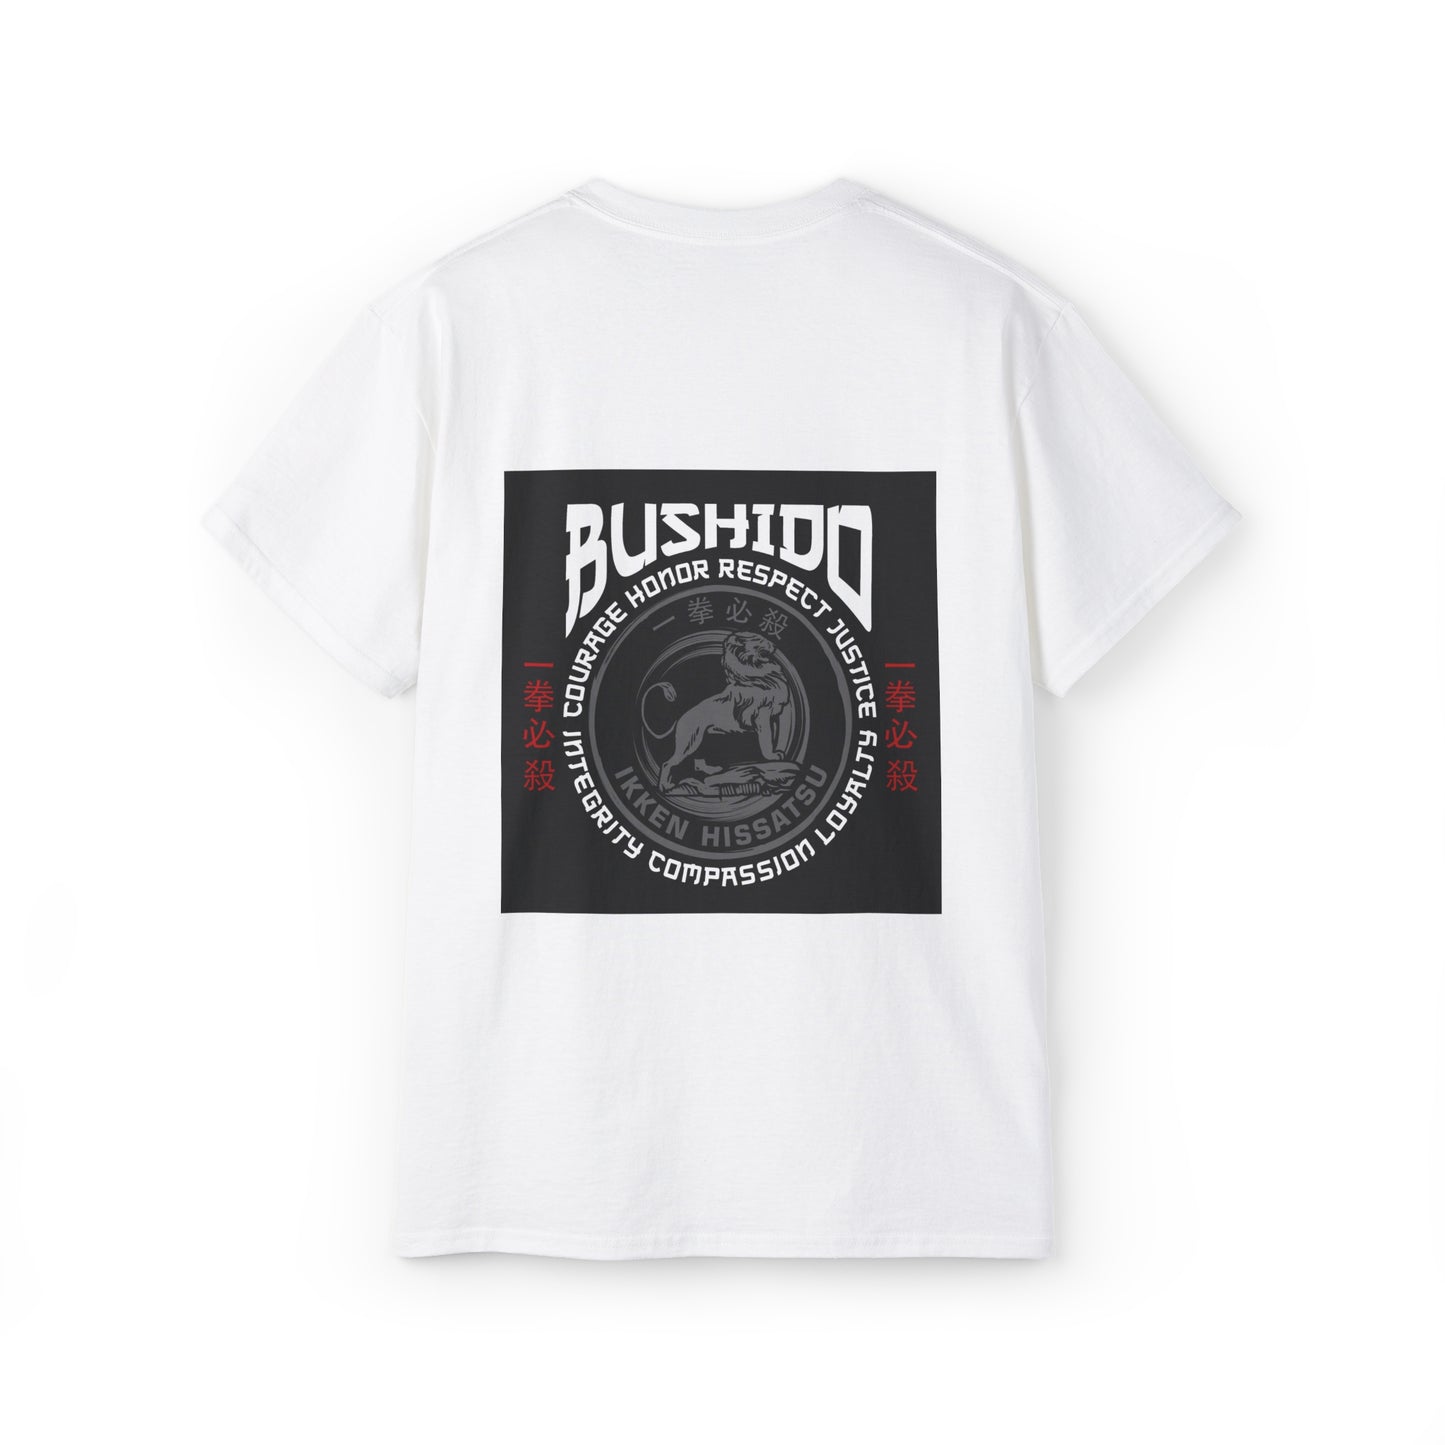 Bushido Tshirt